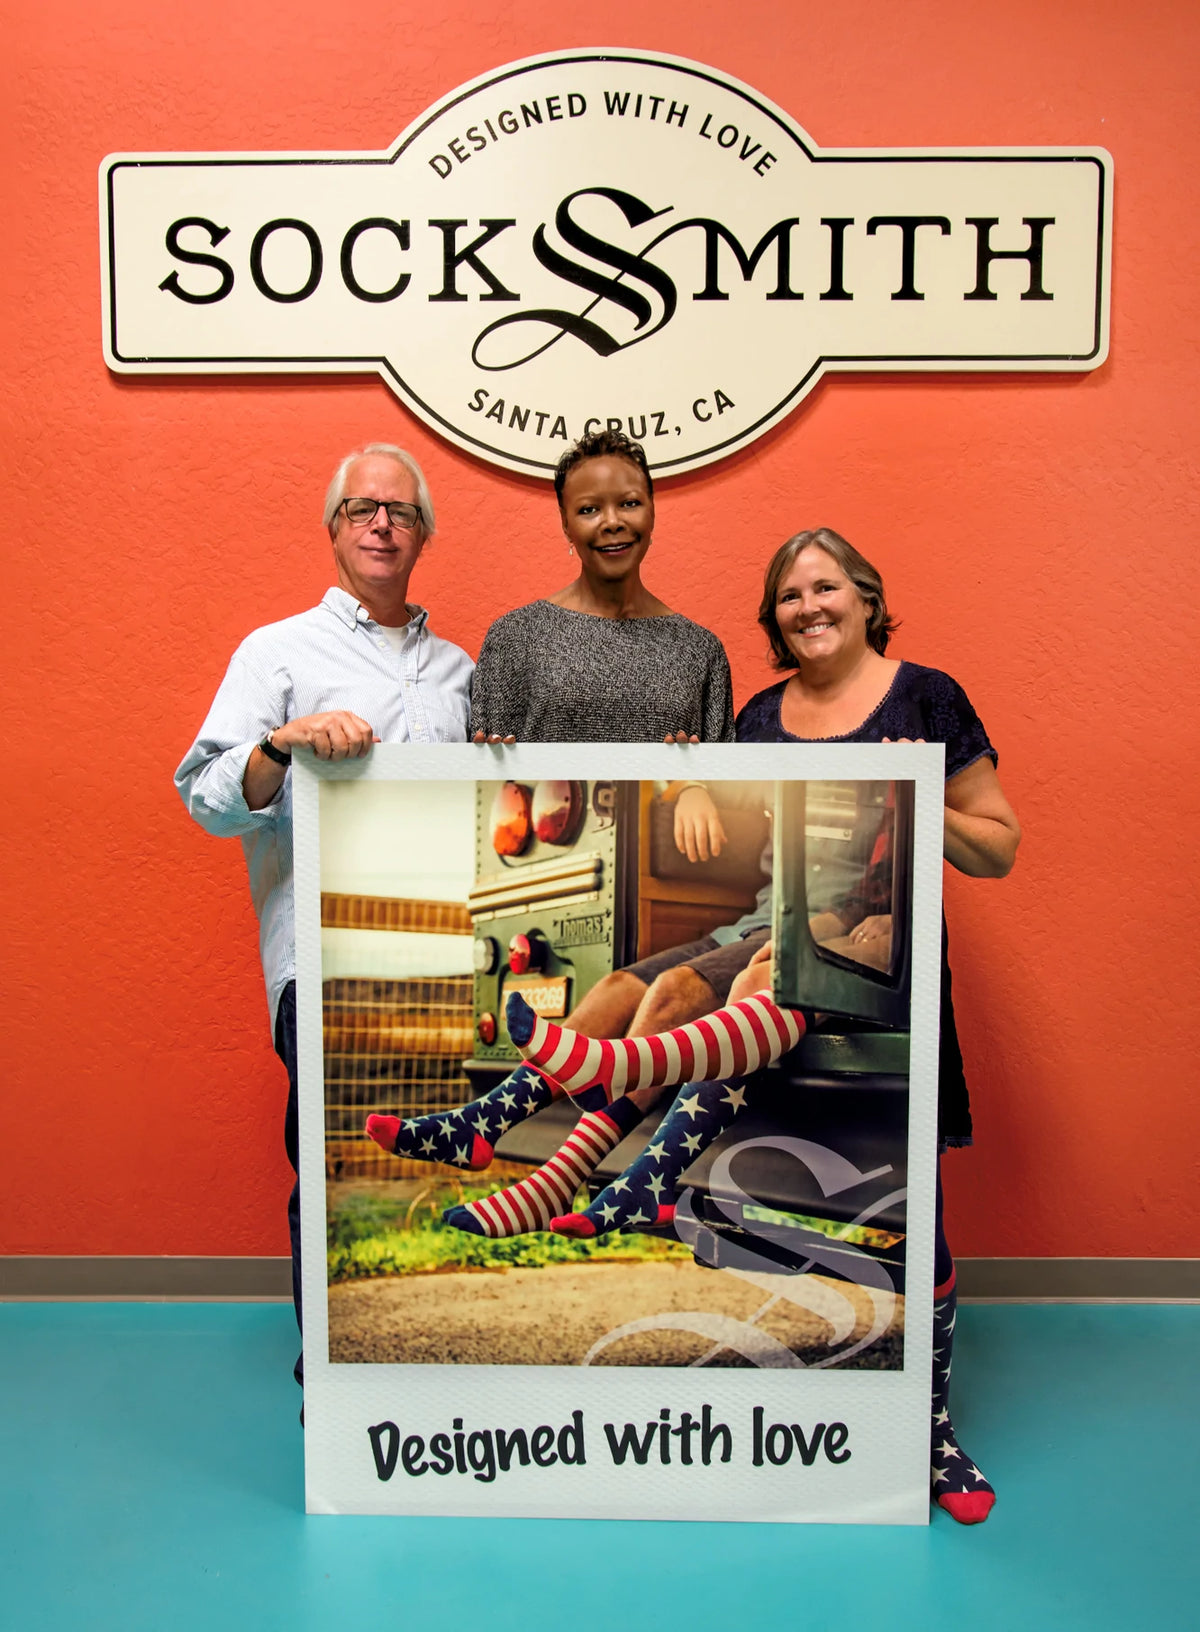 Socksmith owners; Eric, Cassandra, and Ellen